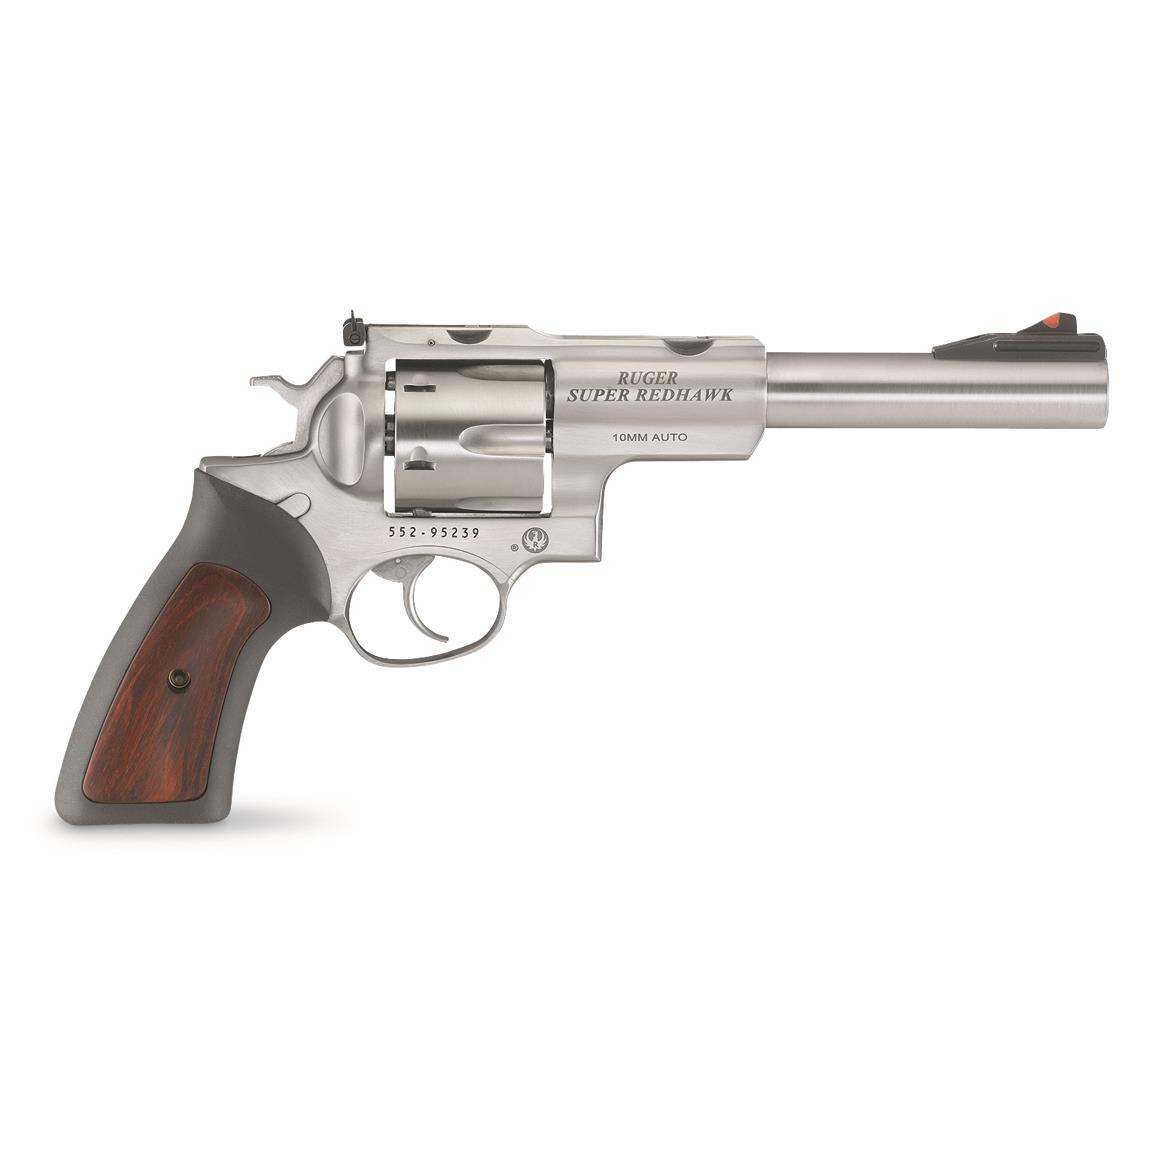 Ruger Super Redhawk, Revolver, 10mm Auto, 6.5" Barrel, 6 Rounds